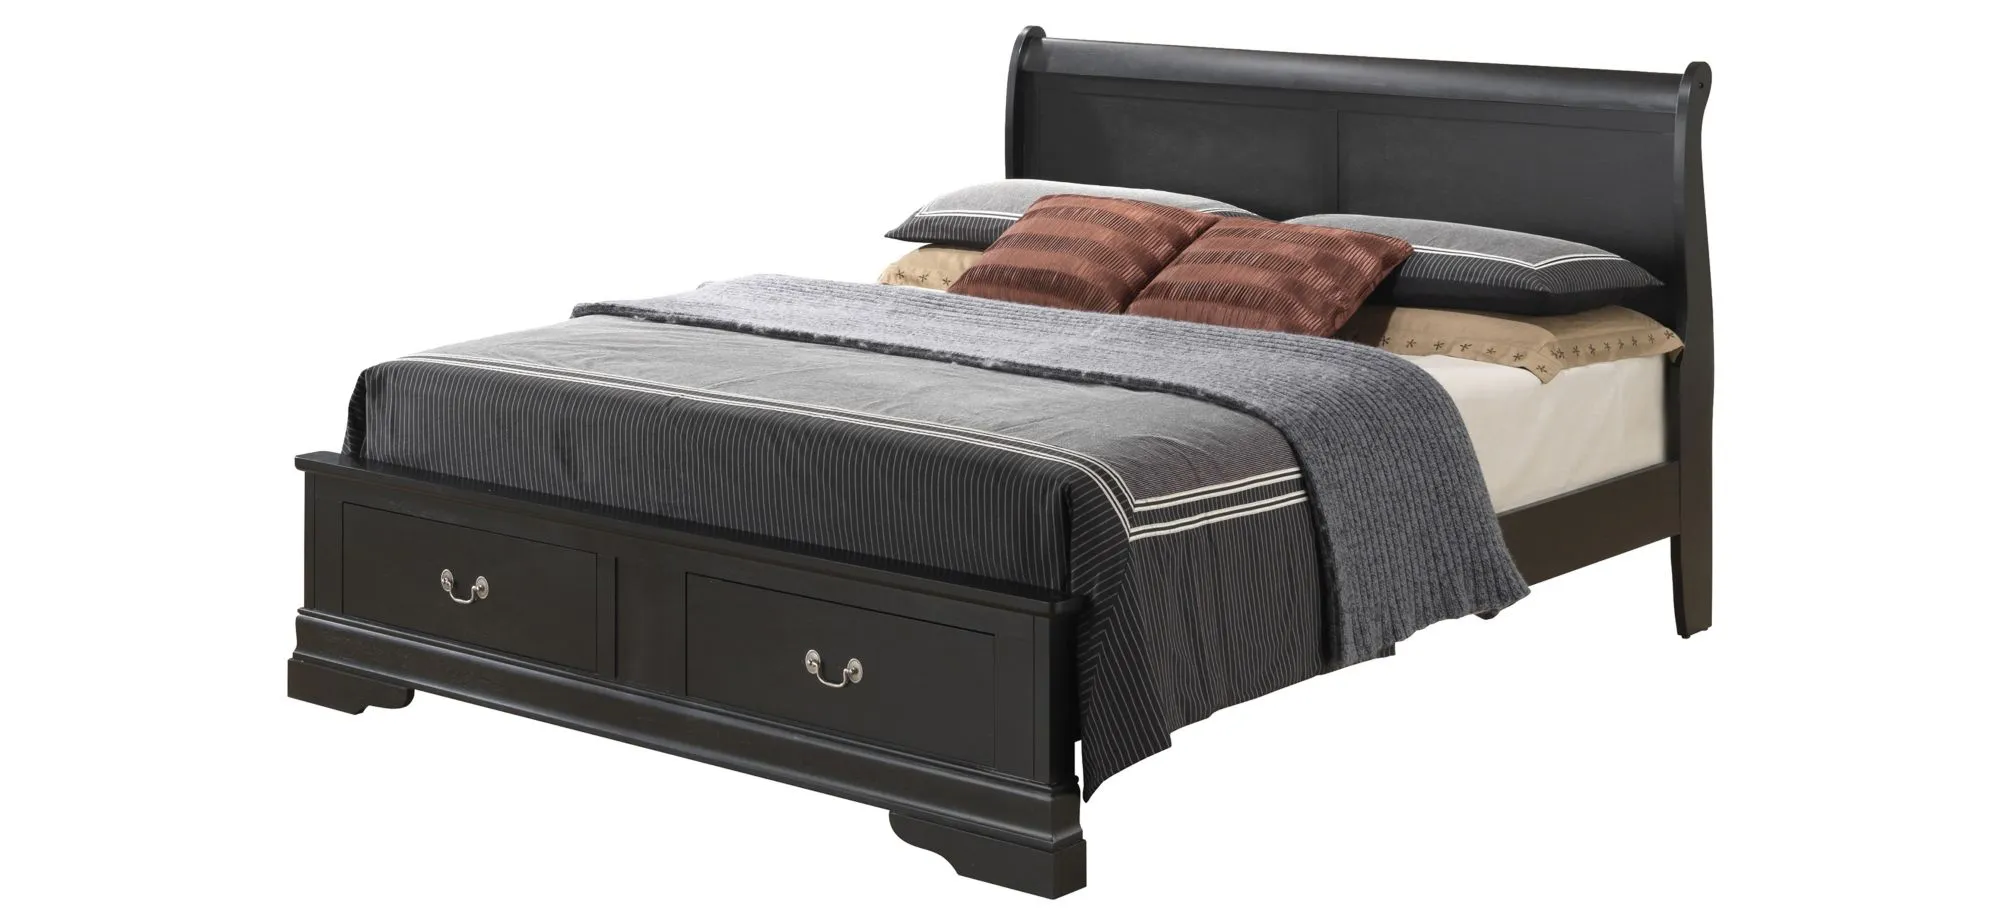 Rossie Storage Bed in Black by Glory Furniture